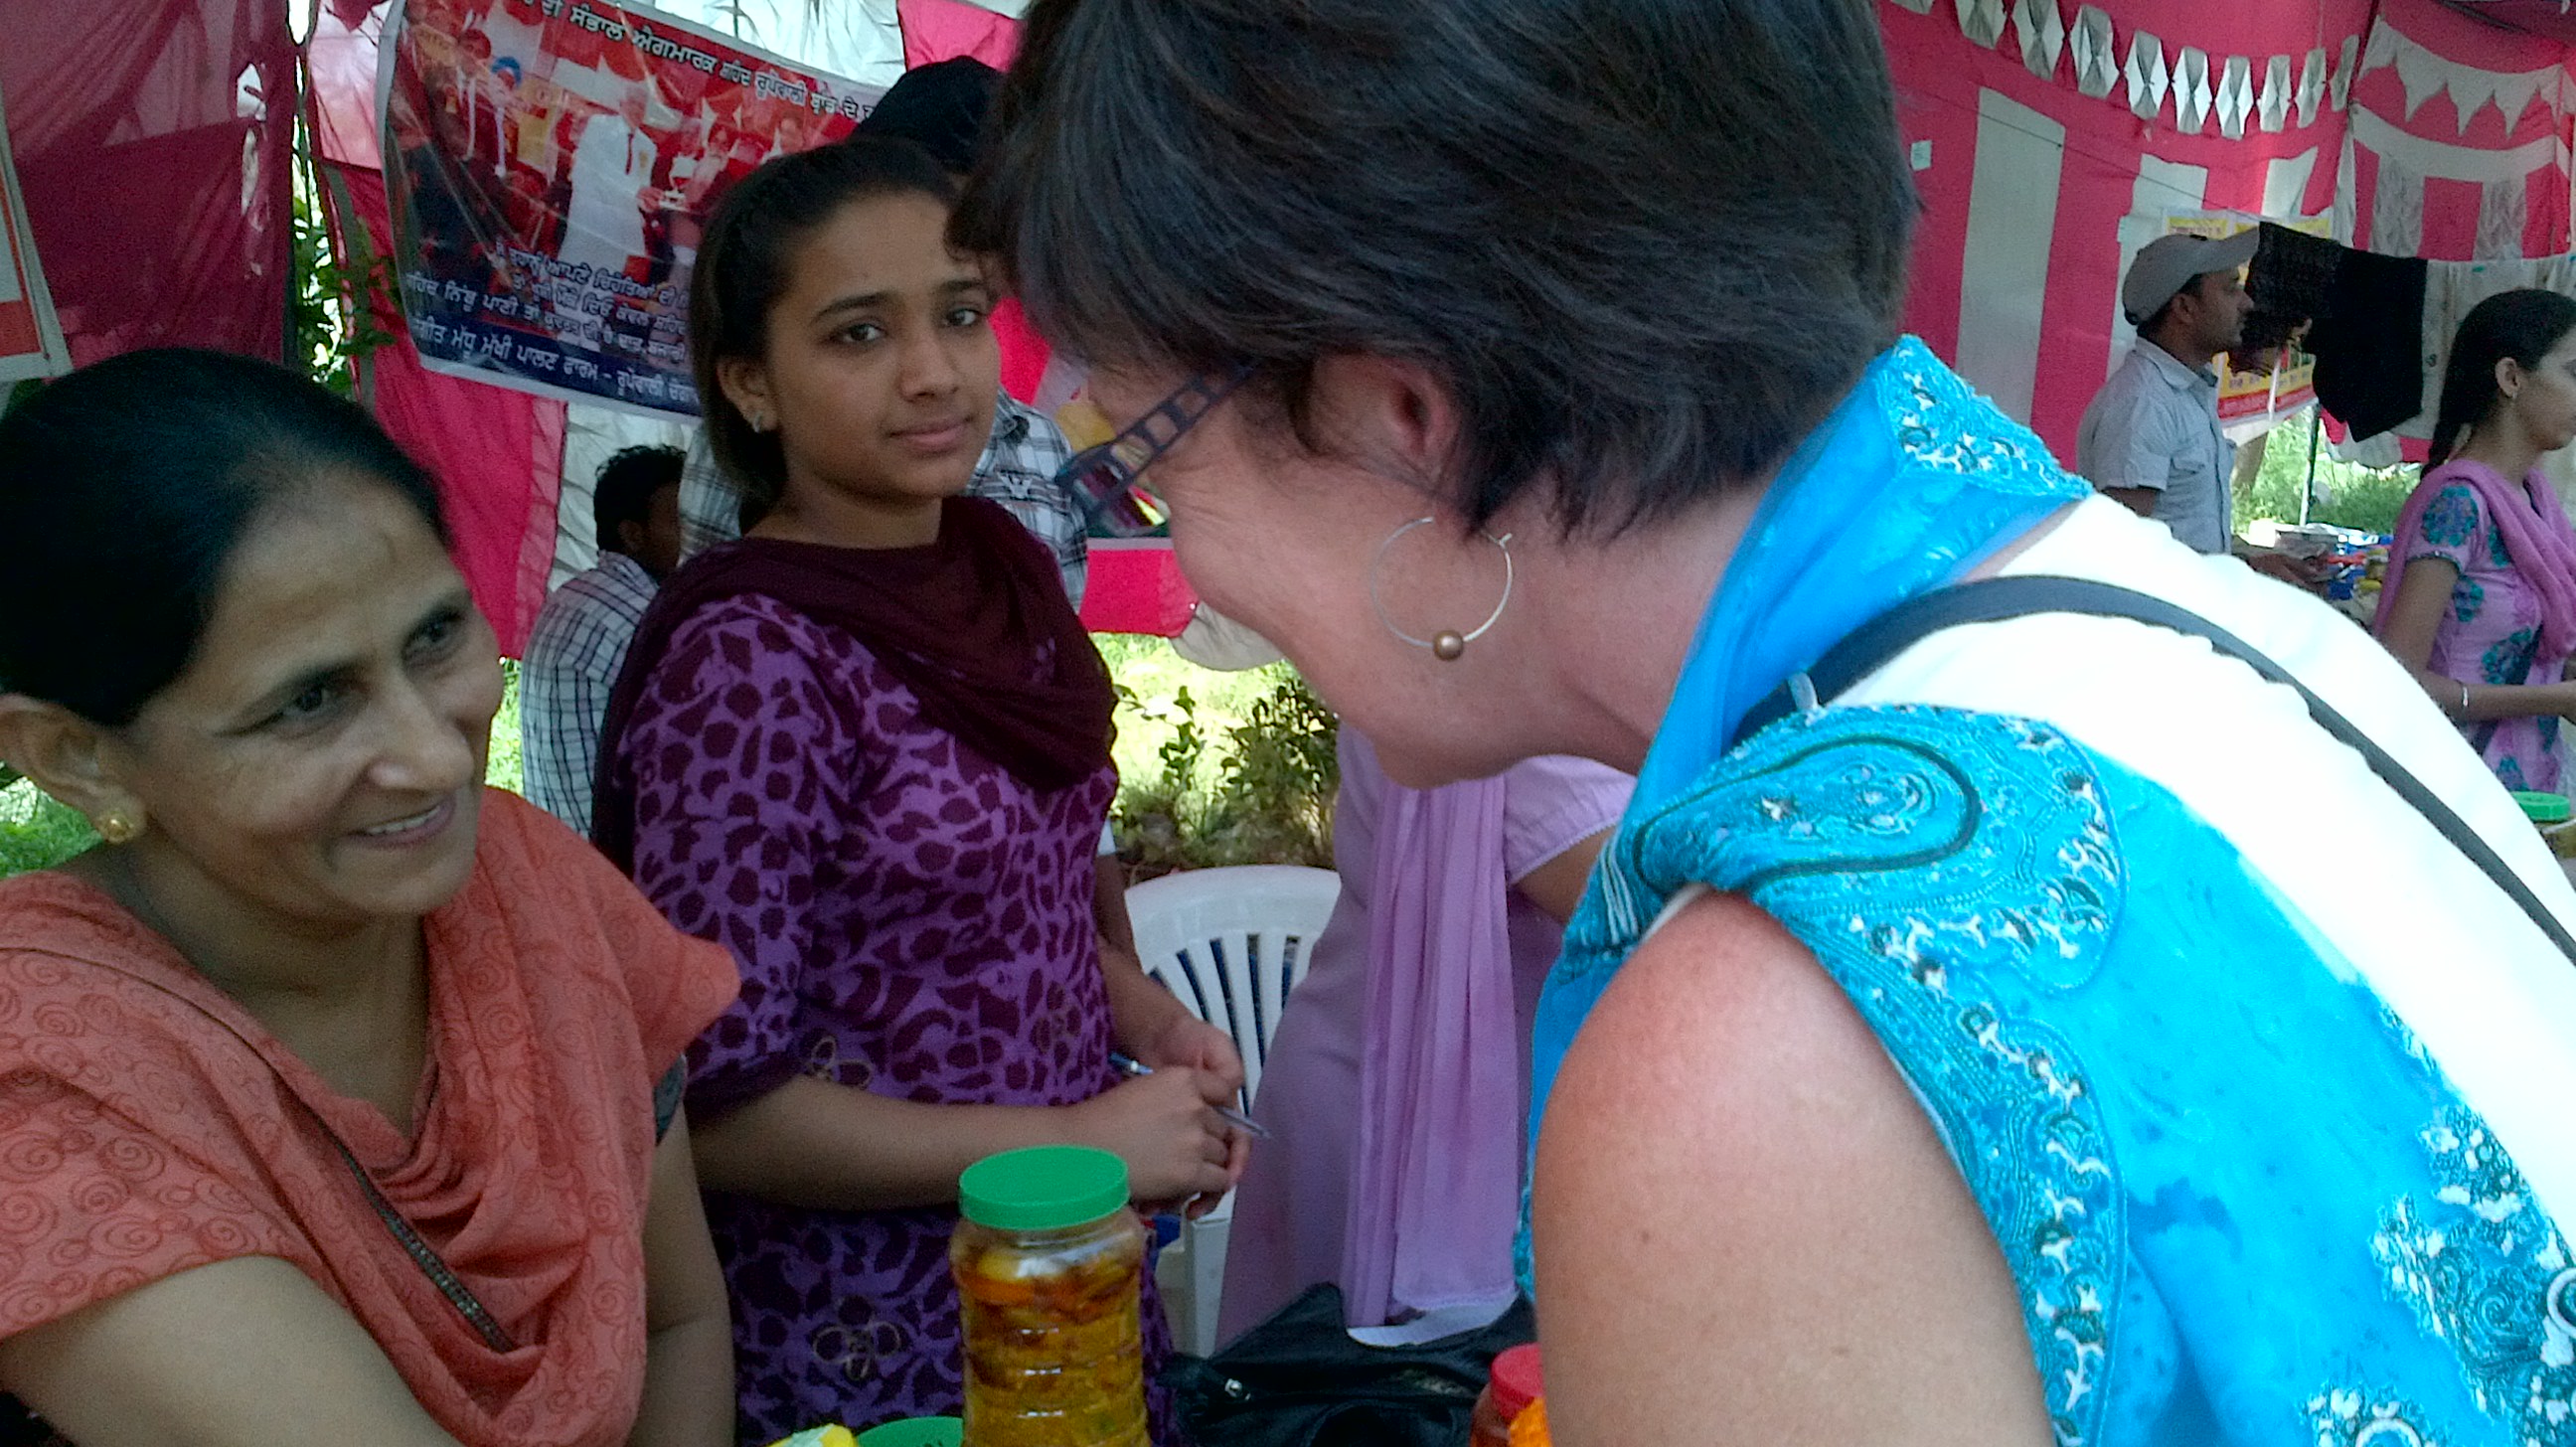 Speaking with women farmers in Ludhiana, India.